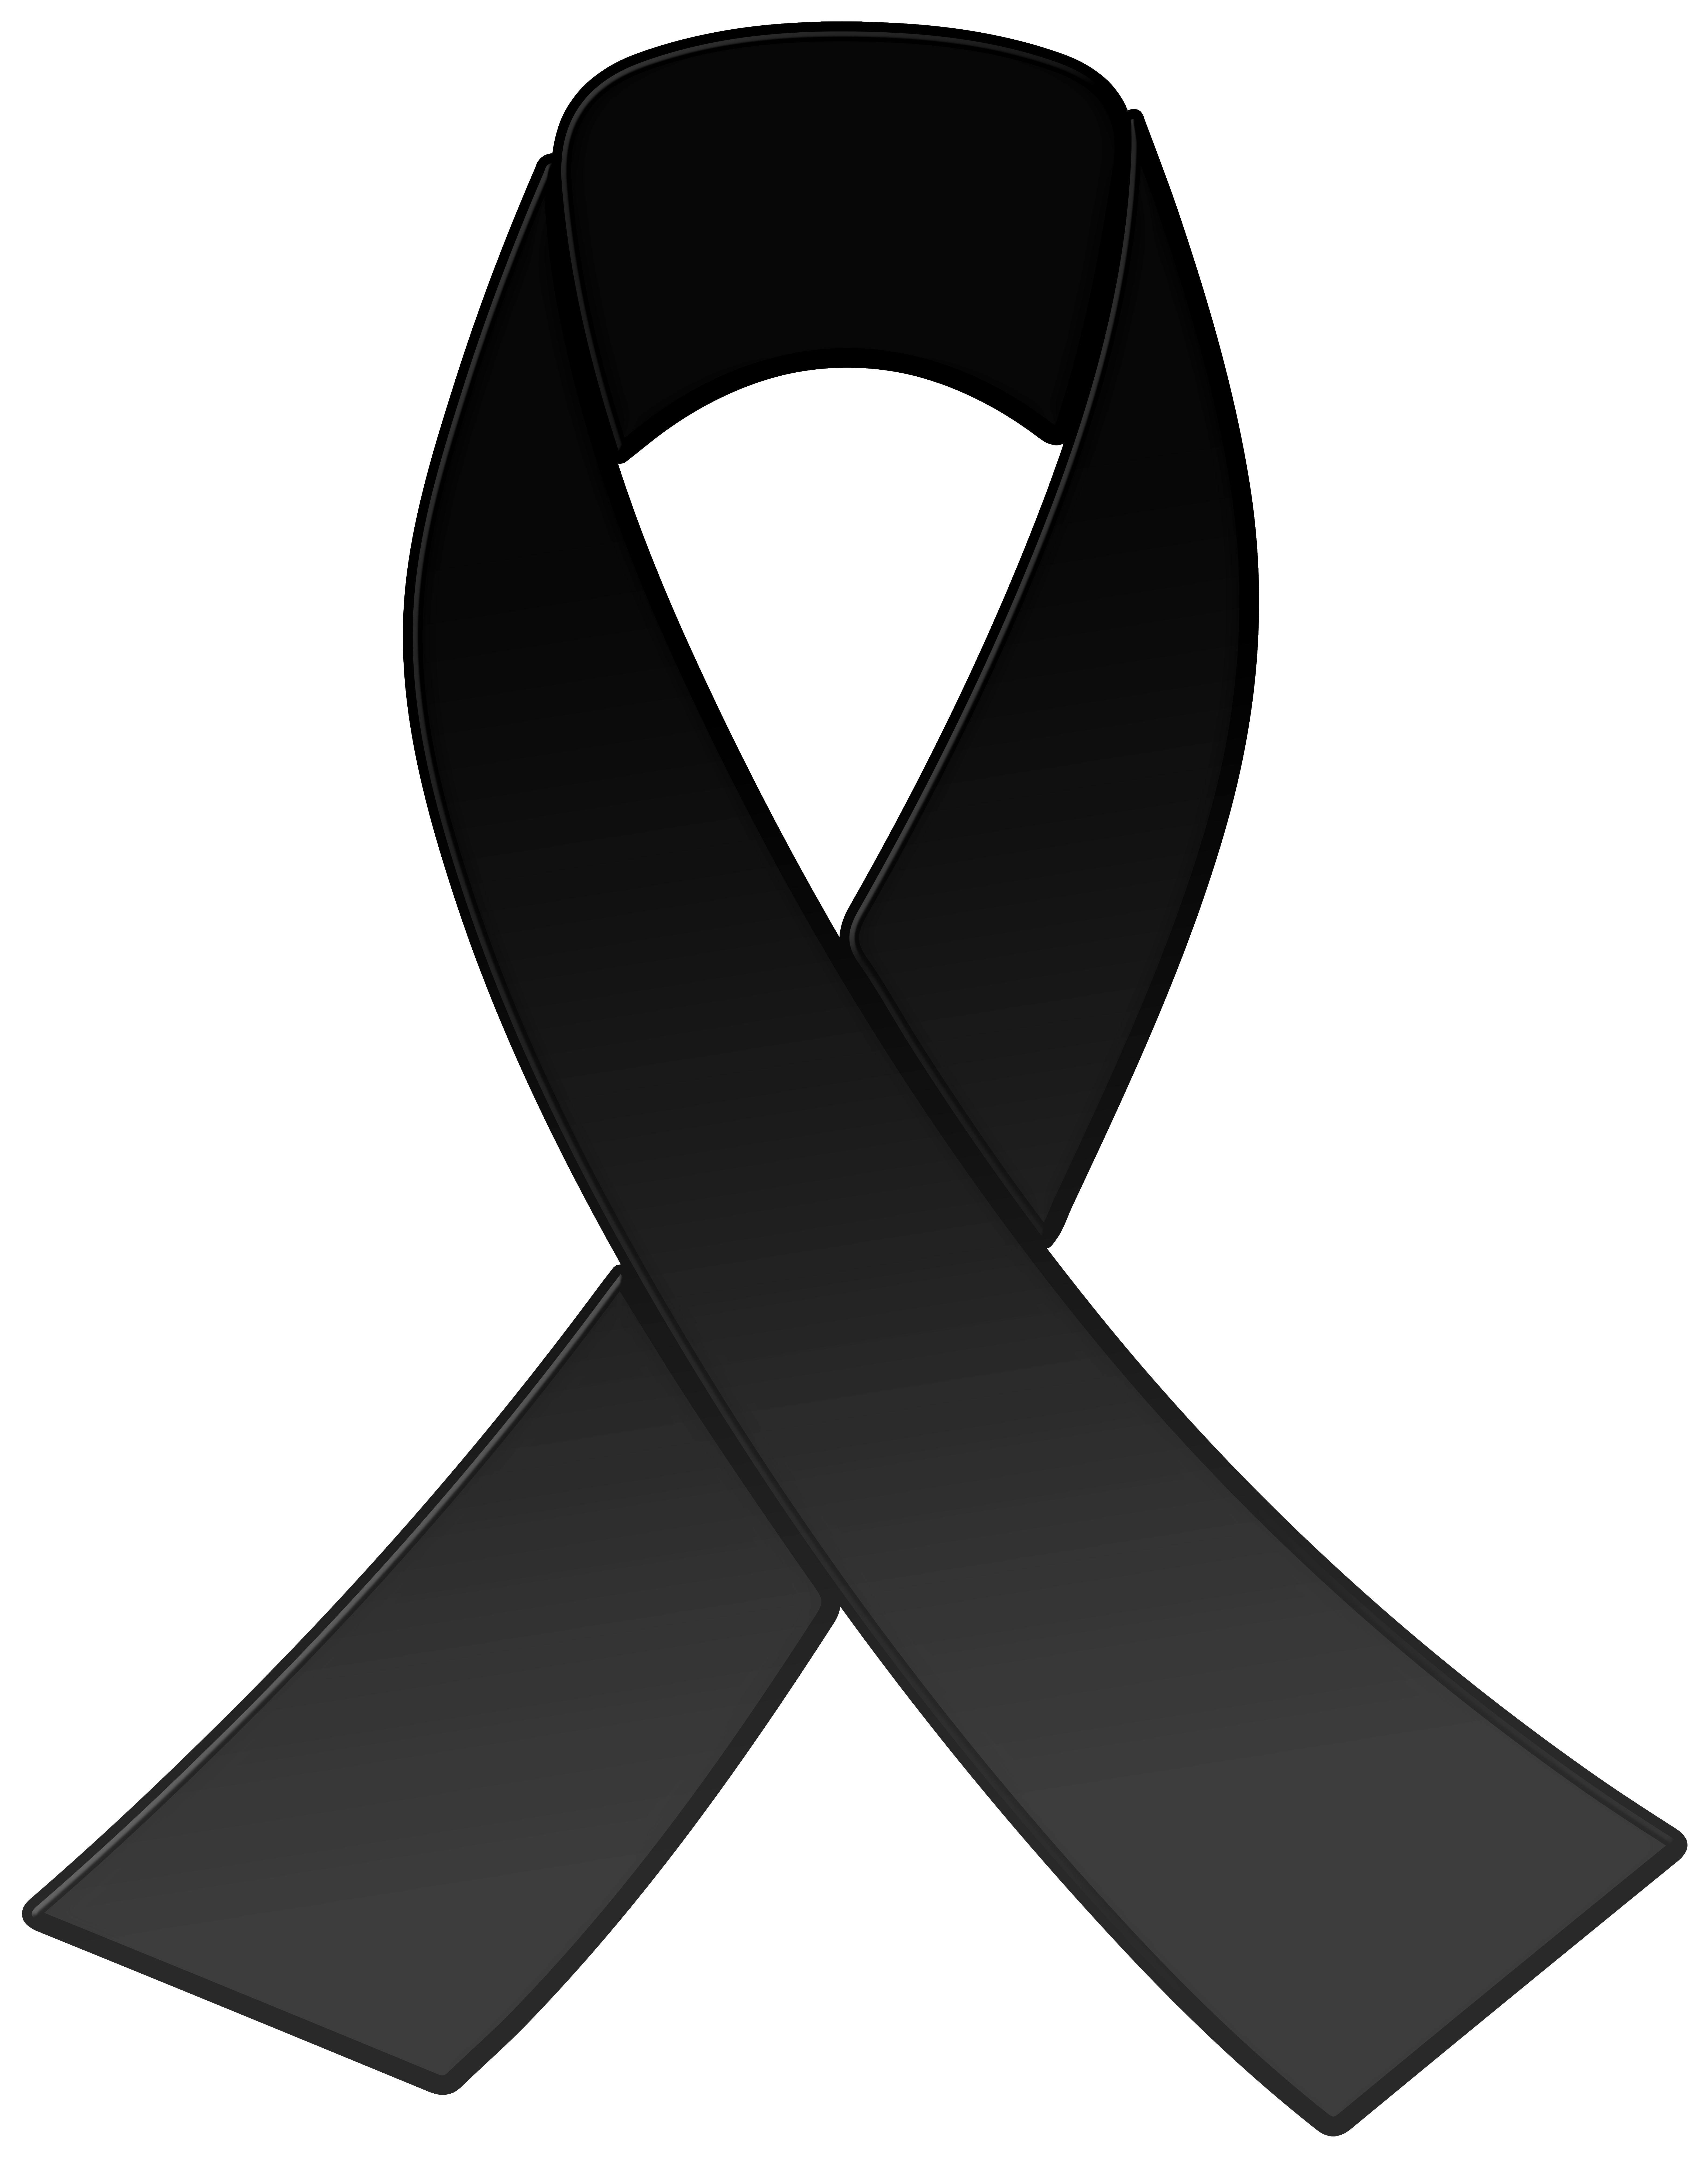 Black Awareness Ribbon PNG Clipart - Best WEB Clipart